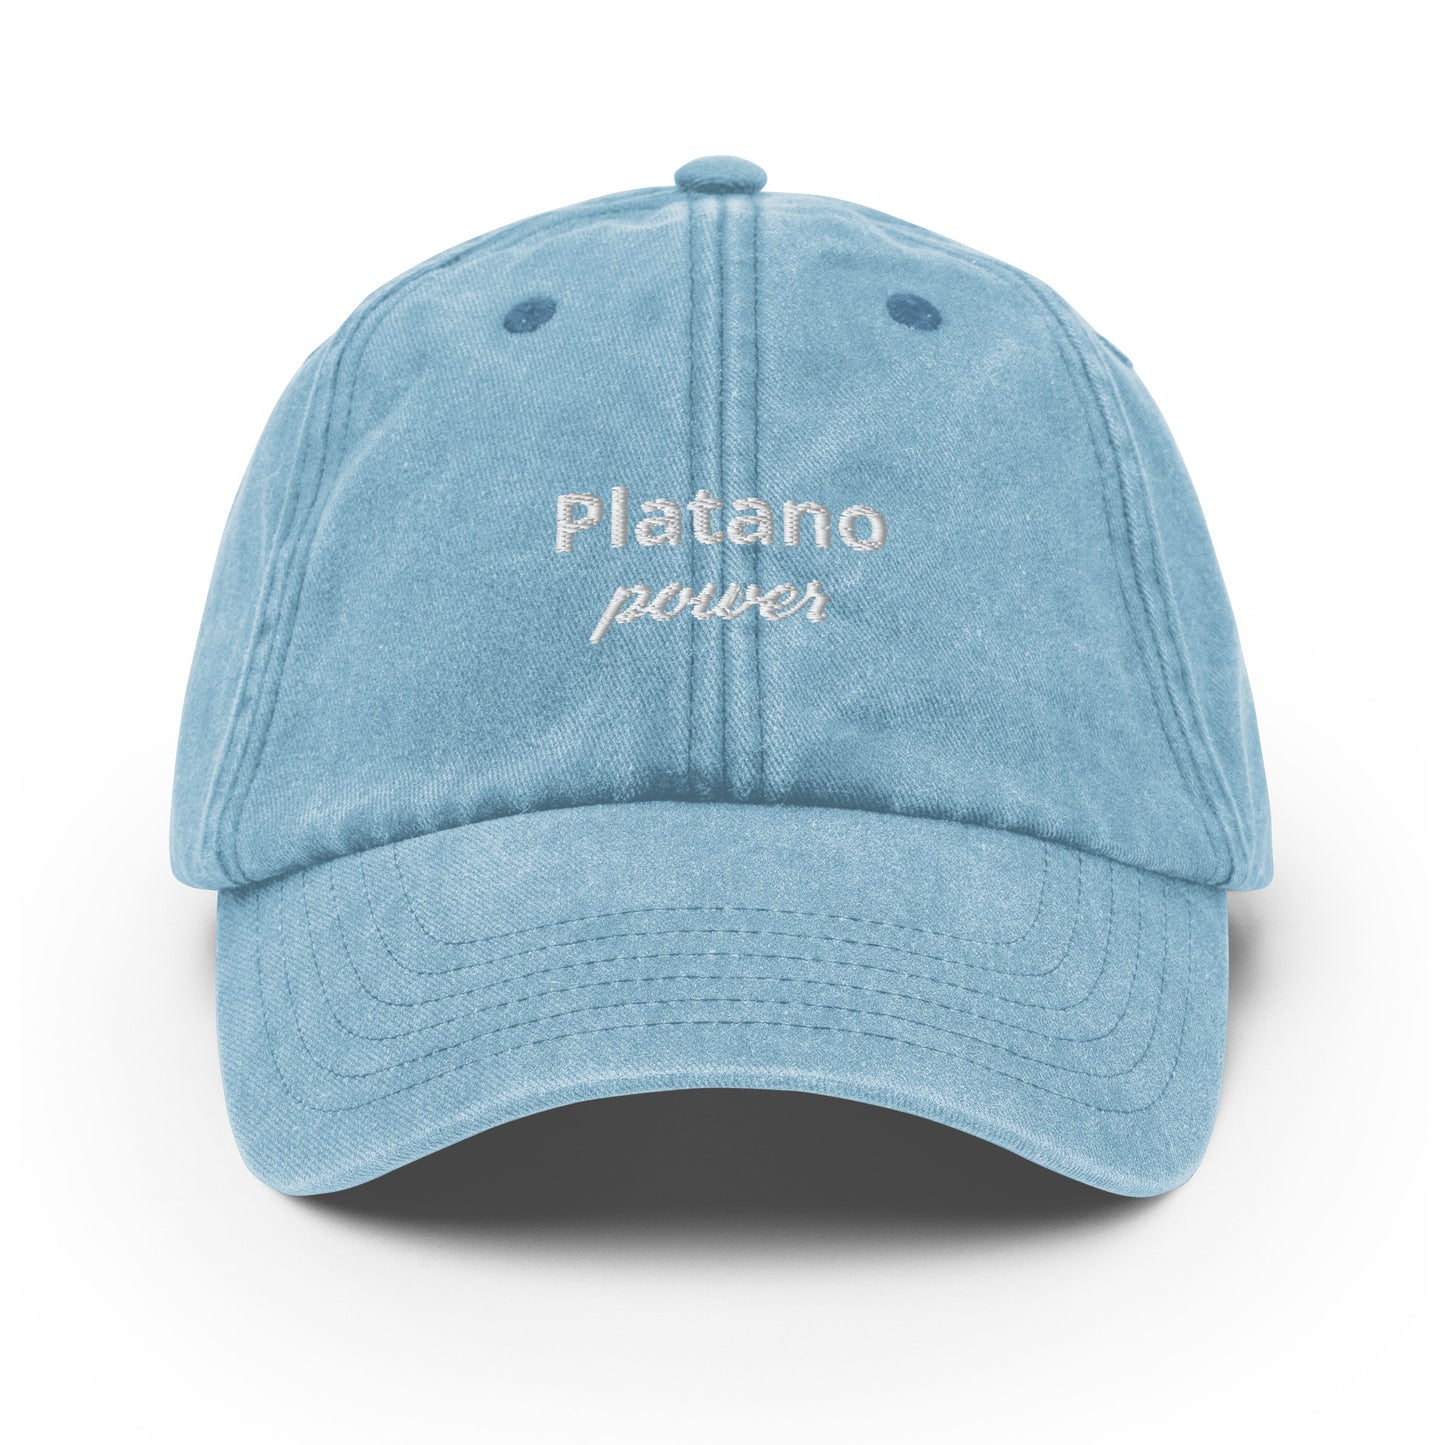 Platano Power Vintage Hat